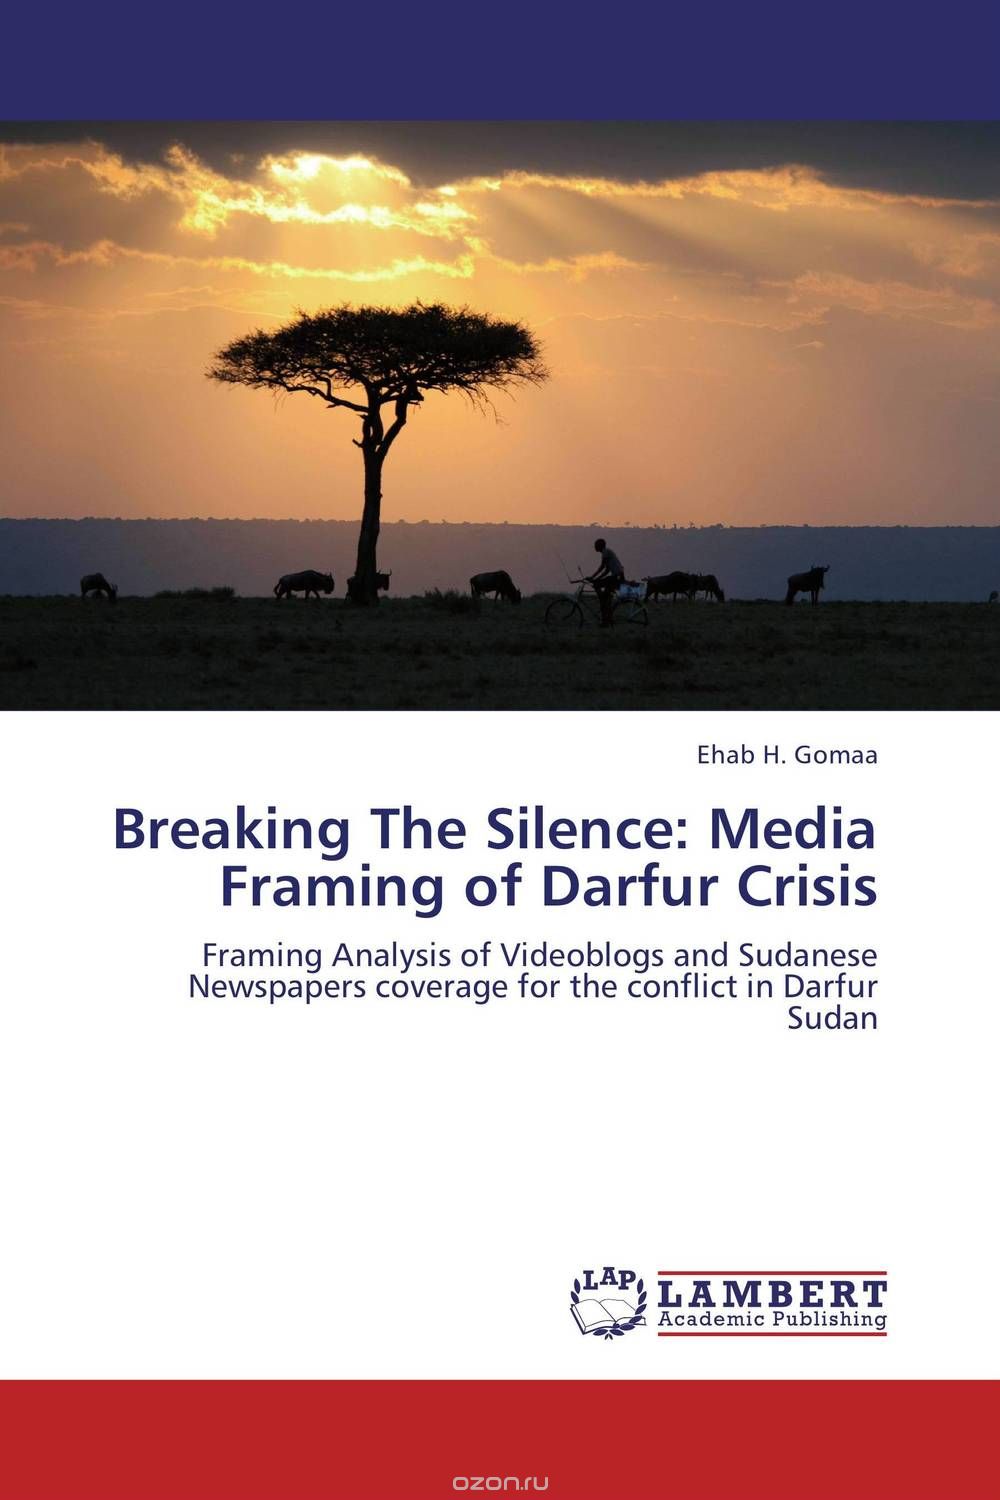 Скачать книгу "Breaking The Silence: Media Framing of Darfur Crisis"